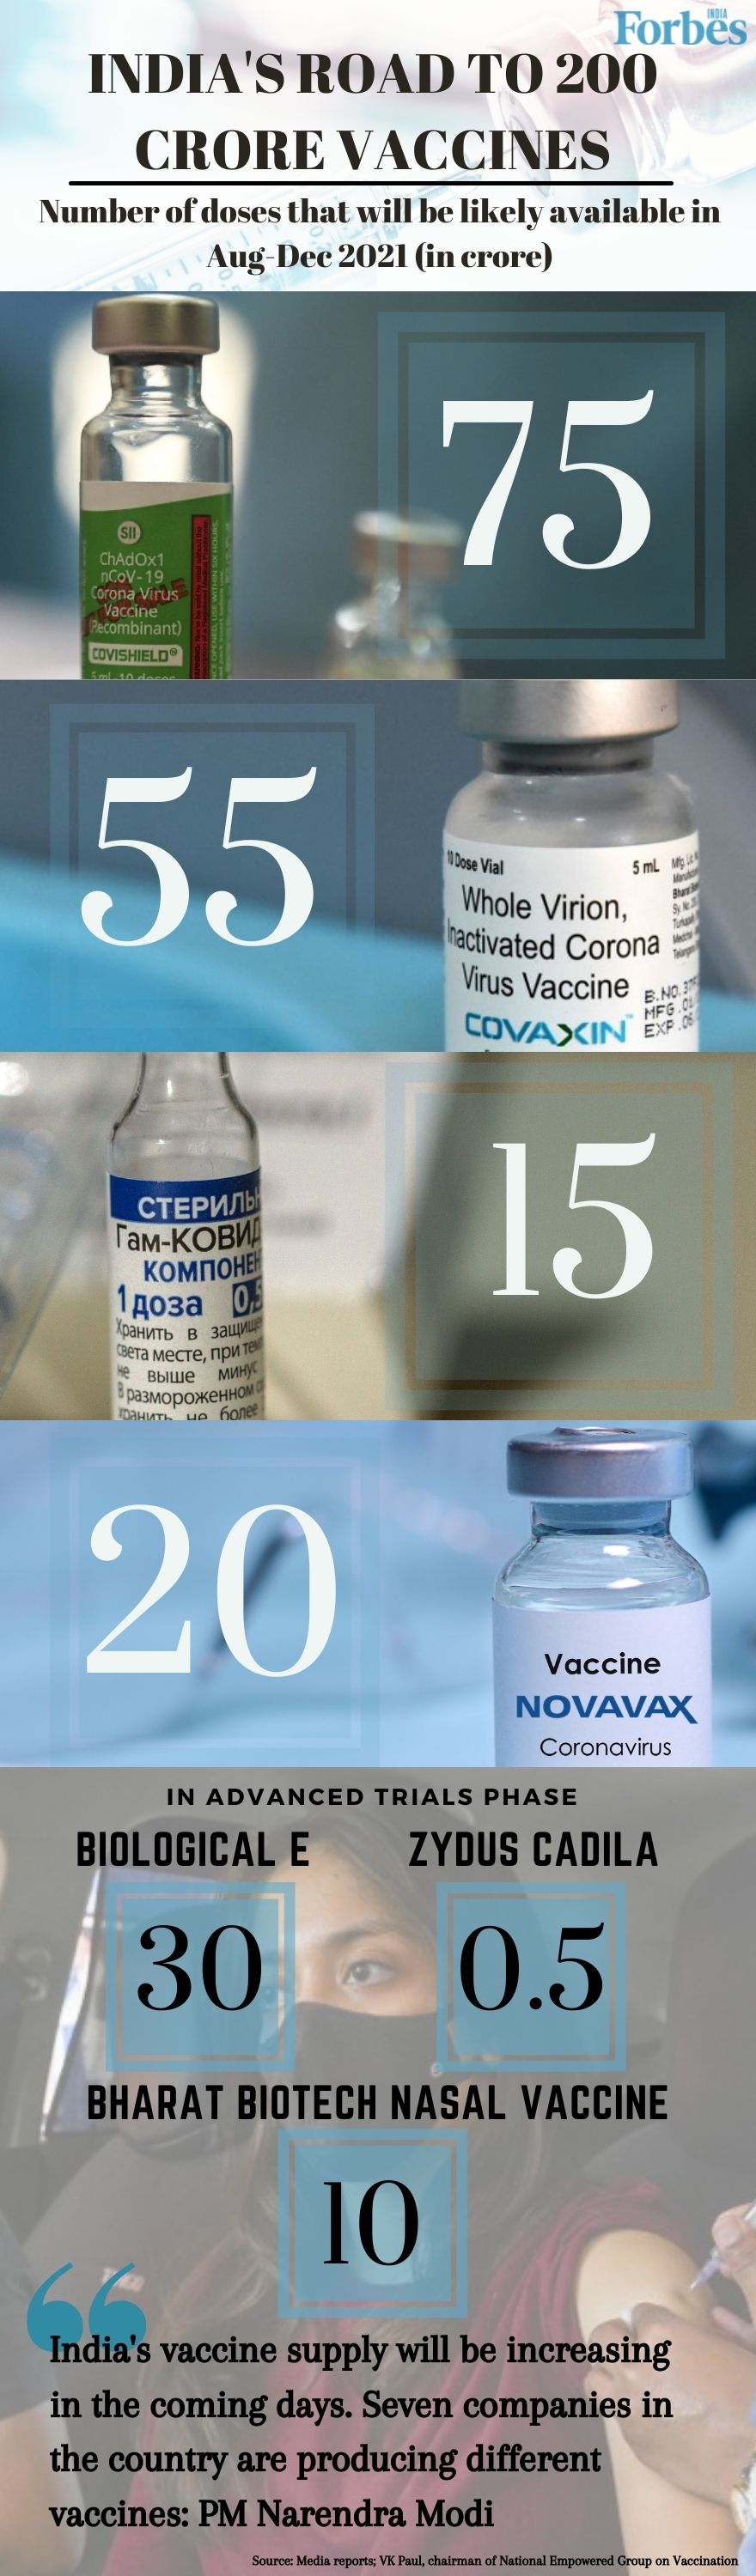 From Covishield to Novovax: Who will make how many vaccine vials to reach India's 200 crore doses mark